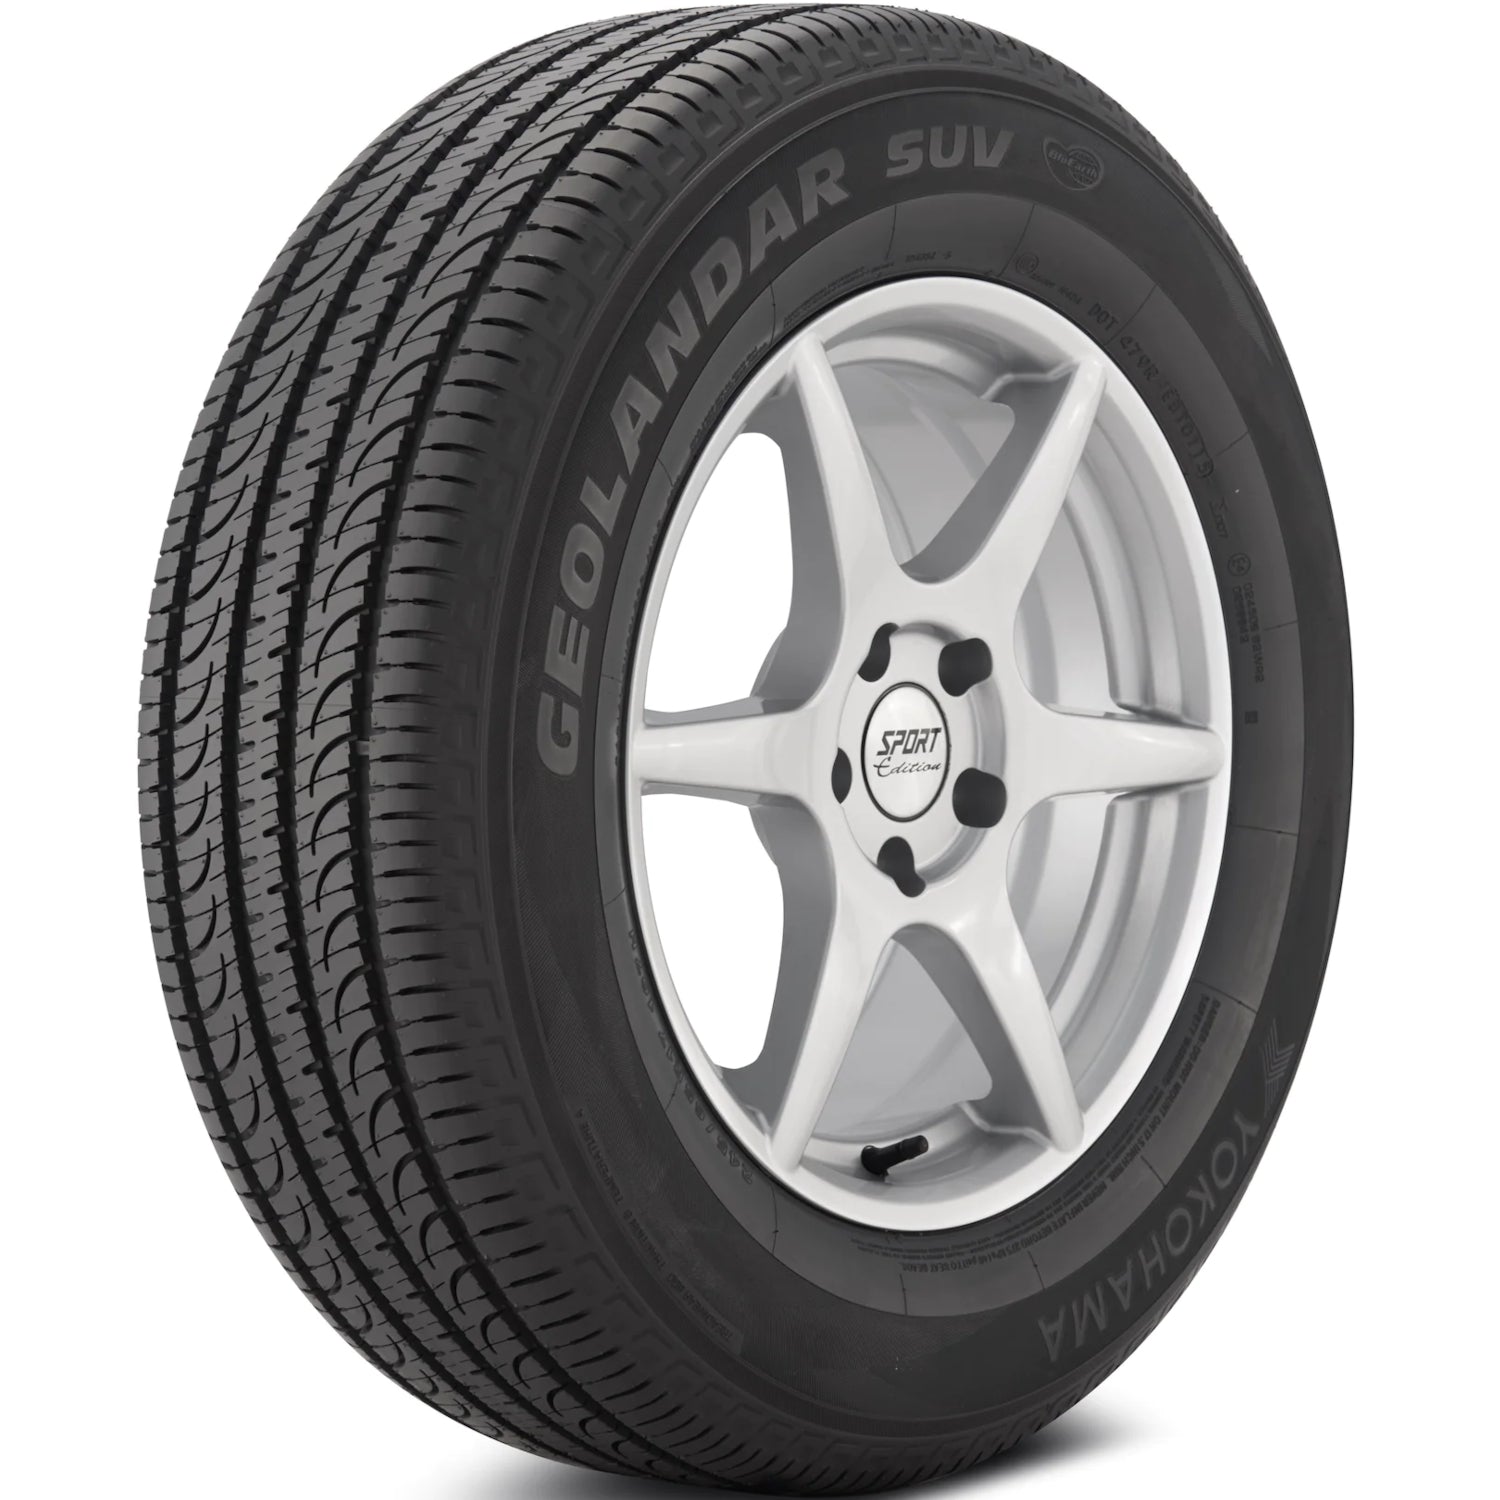 YOKOHAMA GEOLANDAR G055 245/65R17 (29.3X9.7R 17) Tires